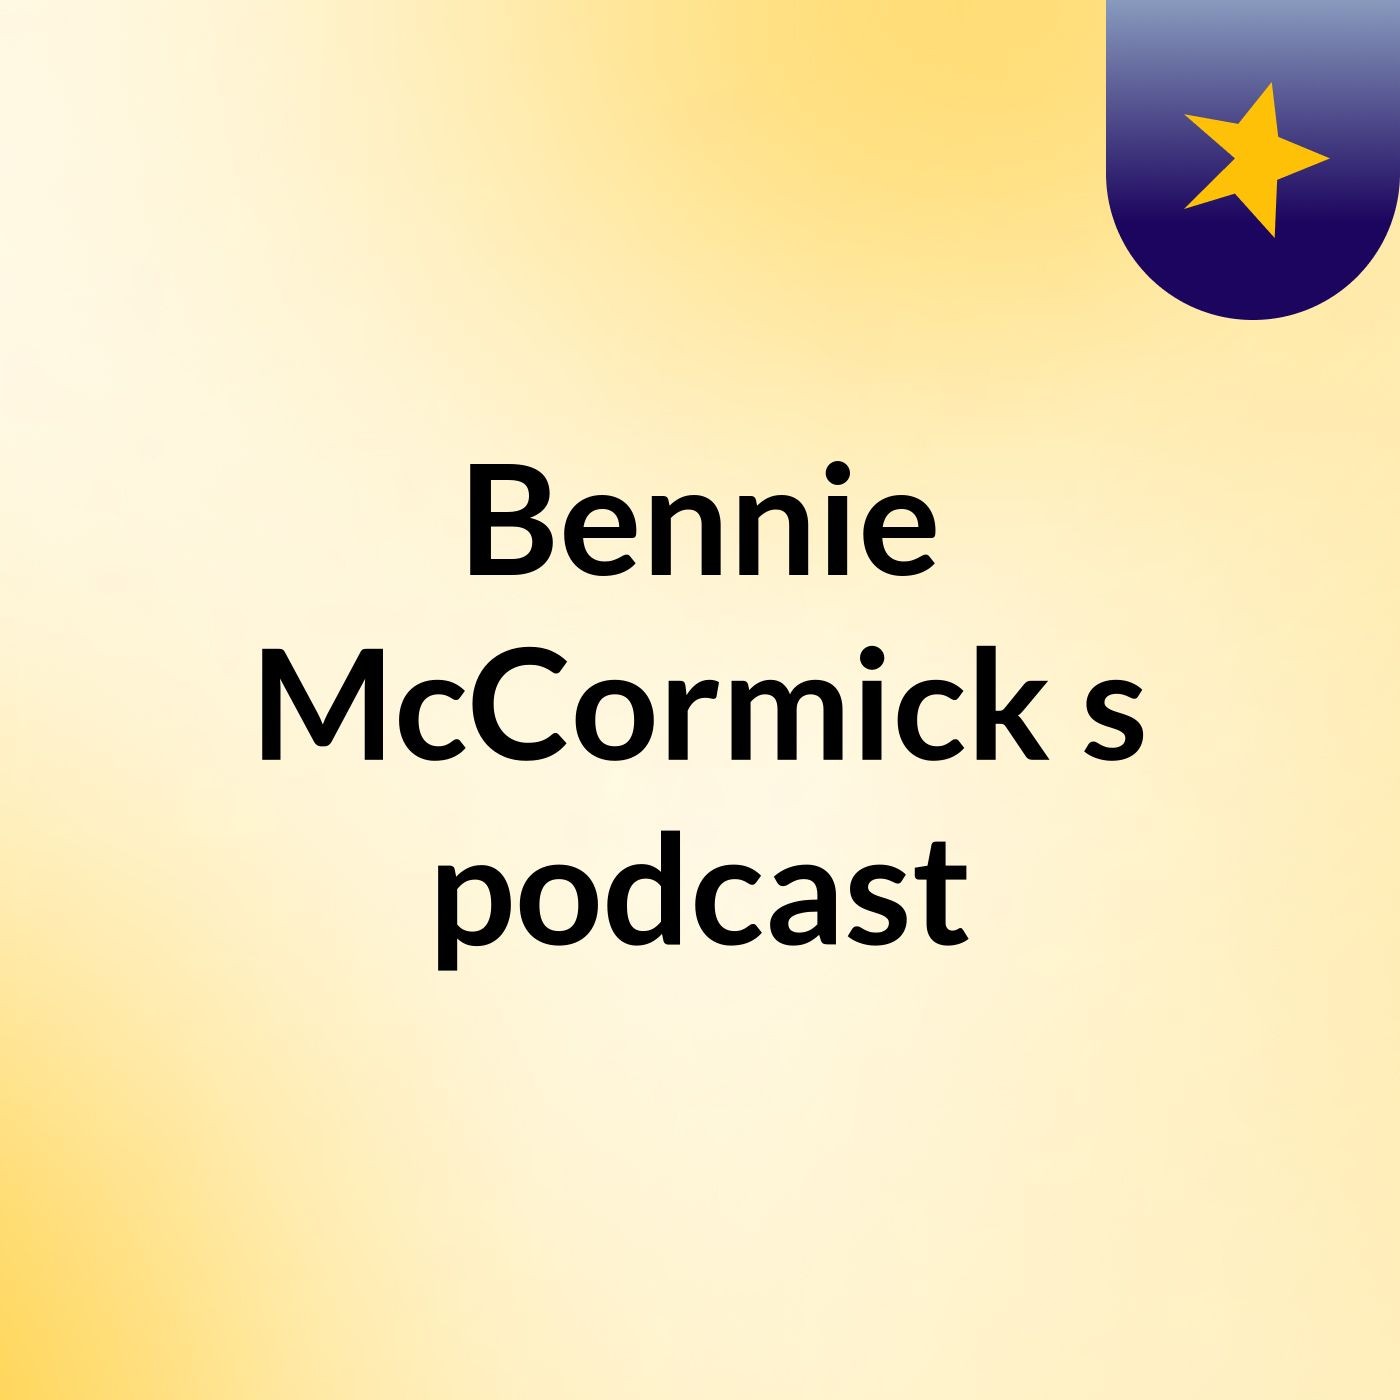 Episode 2 - Bennie McCormick's podcast